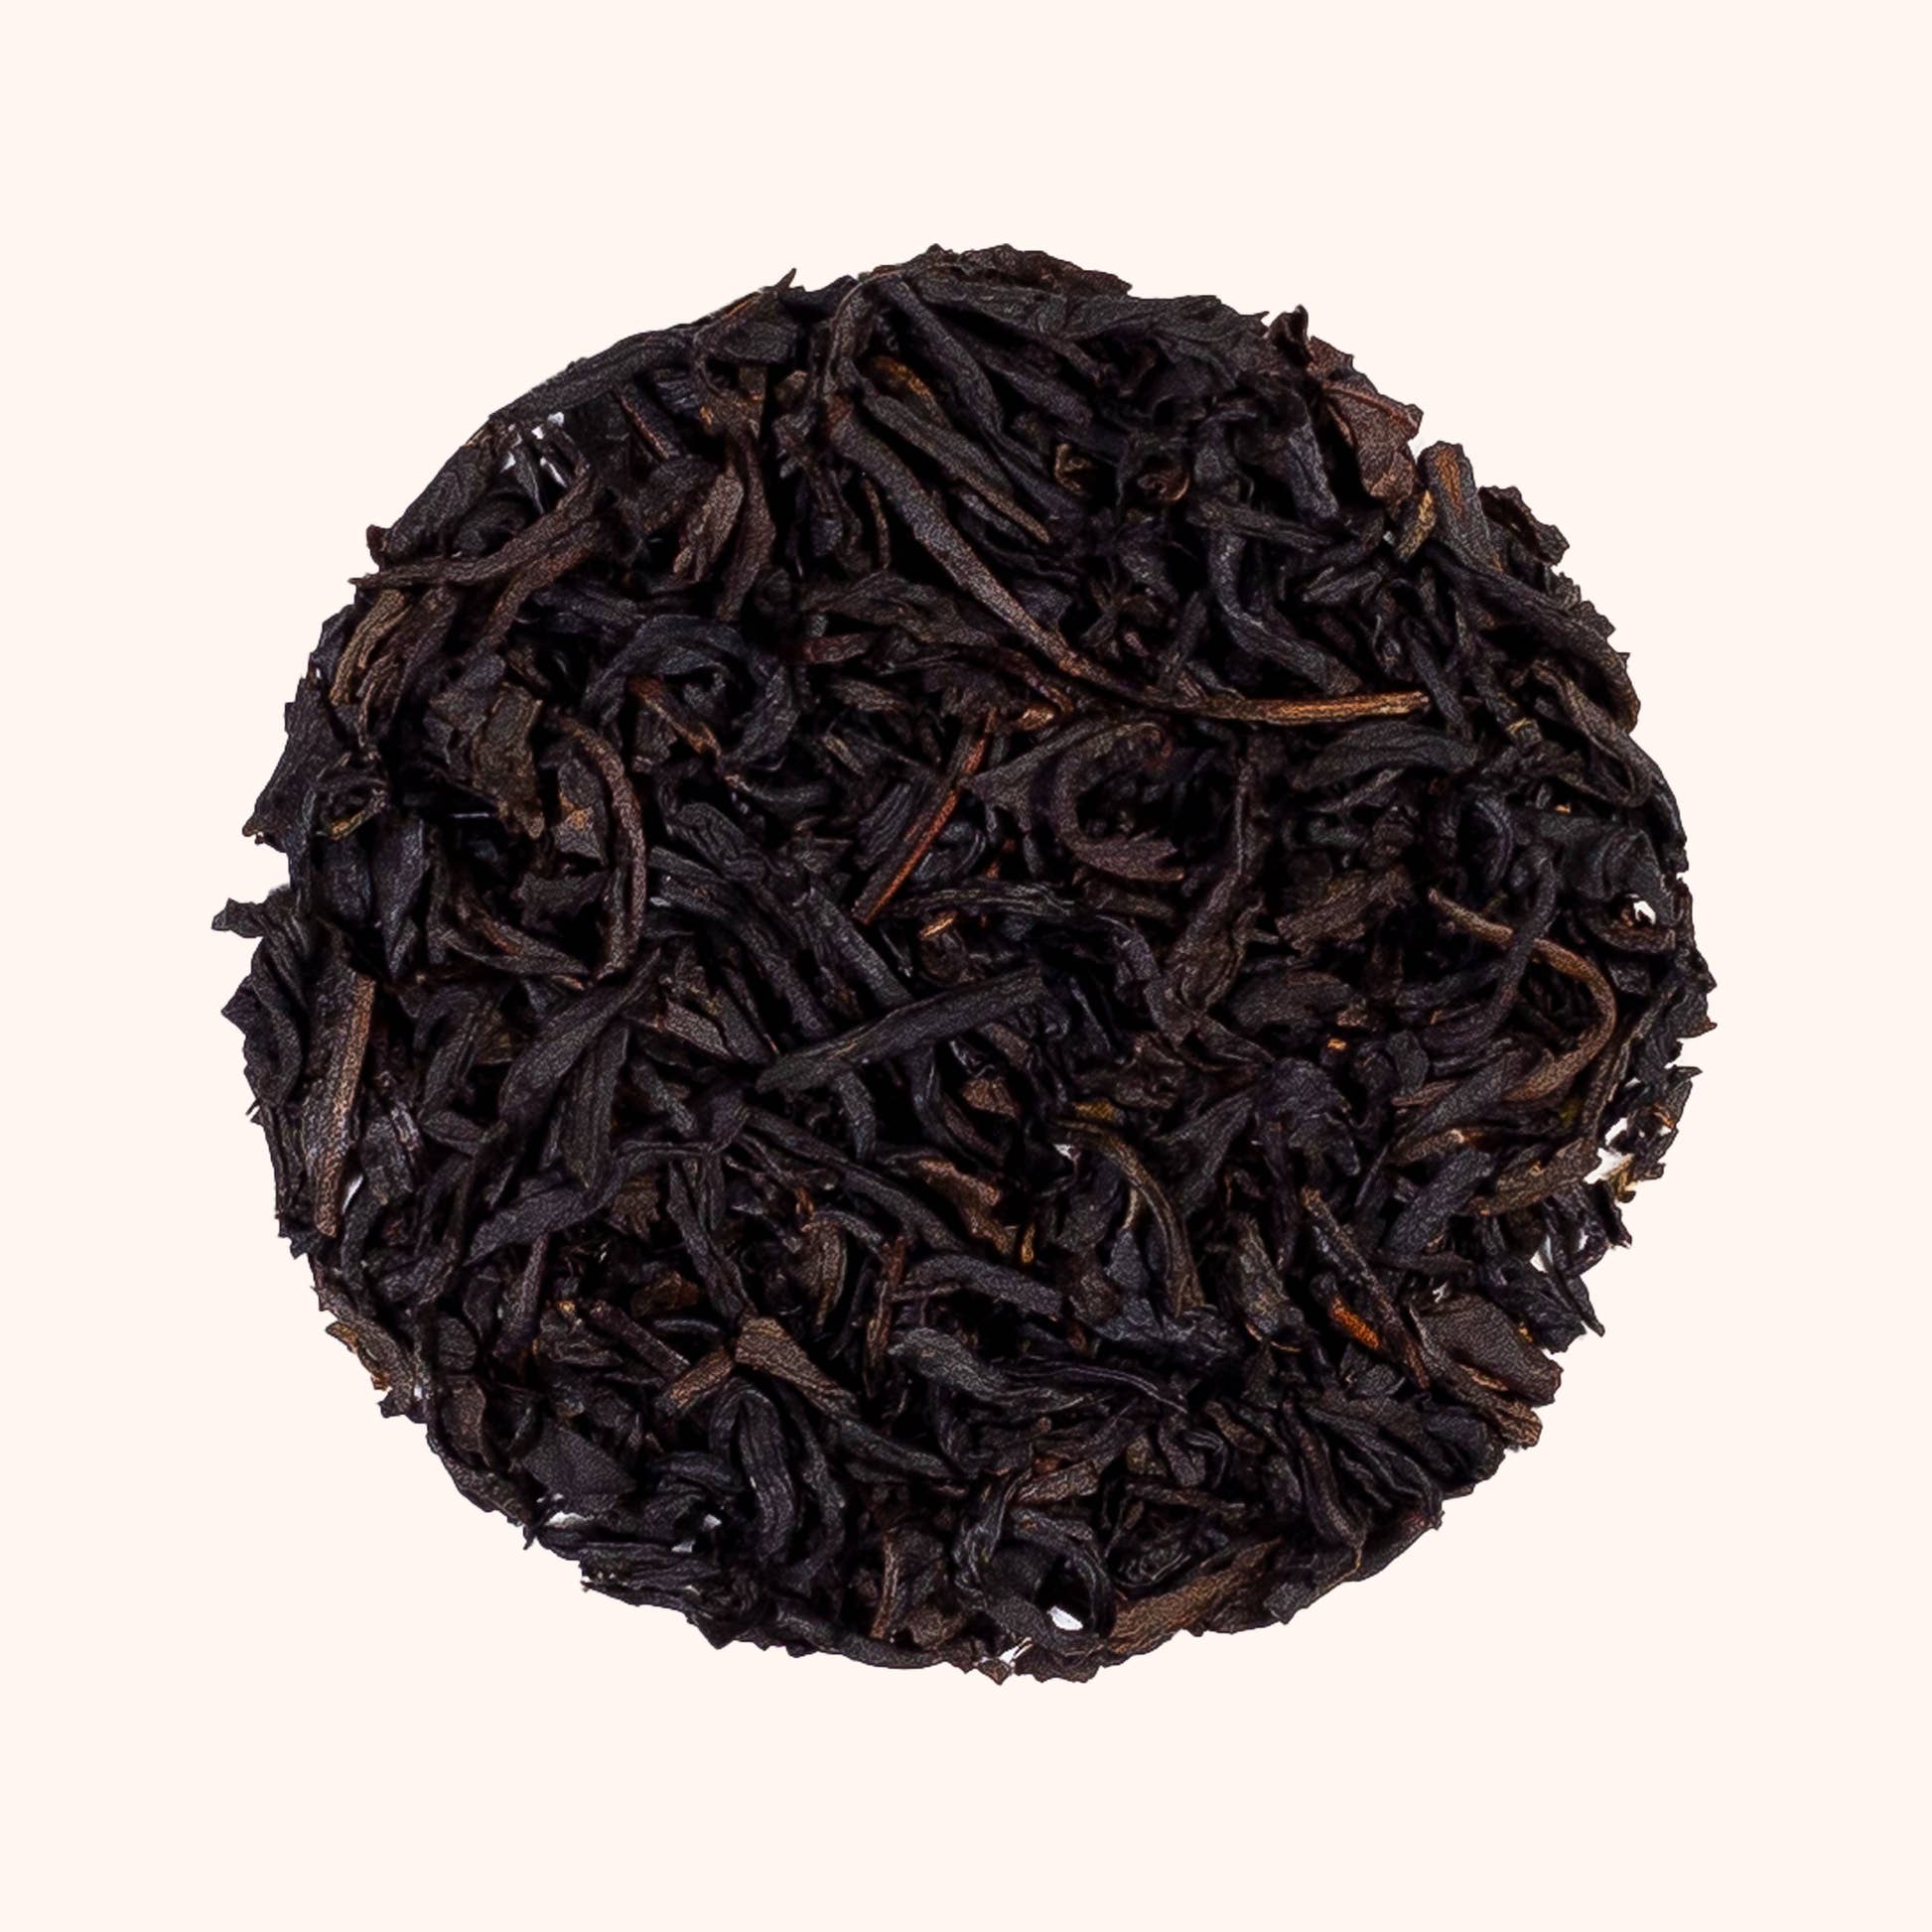 Sipping Streams Tea Company Organic Earl Grey loose leaf tea sample circle